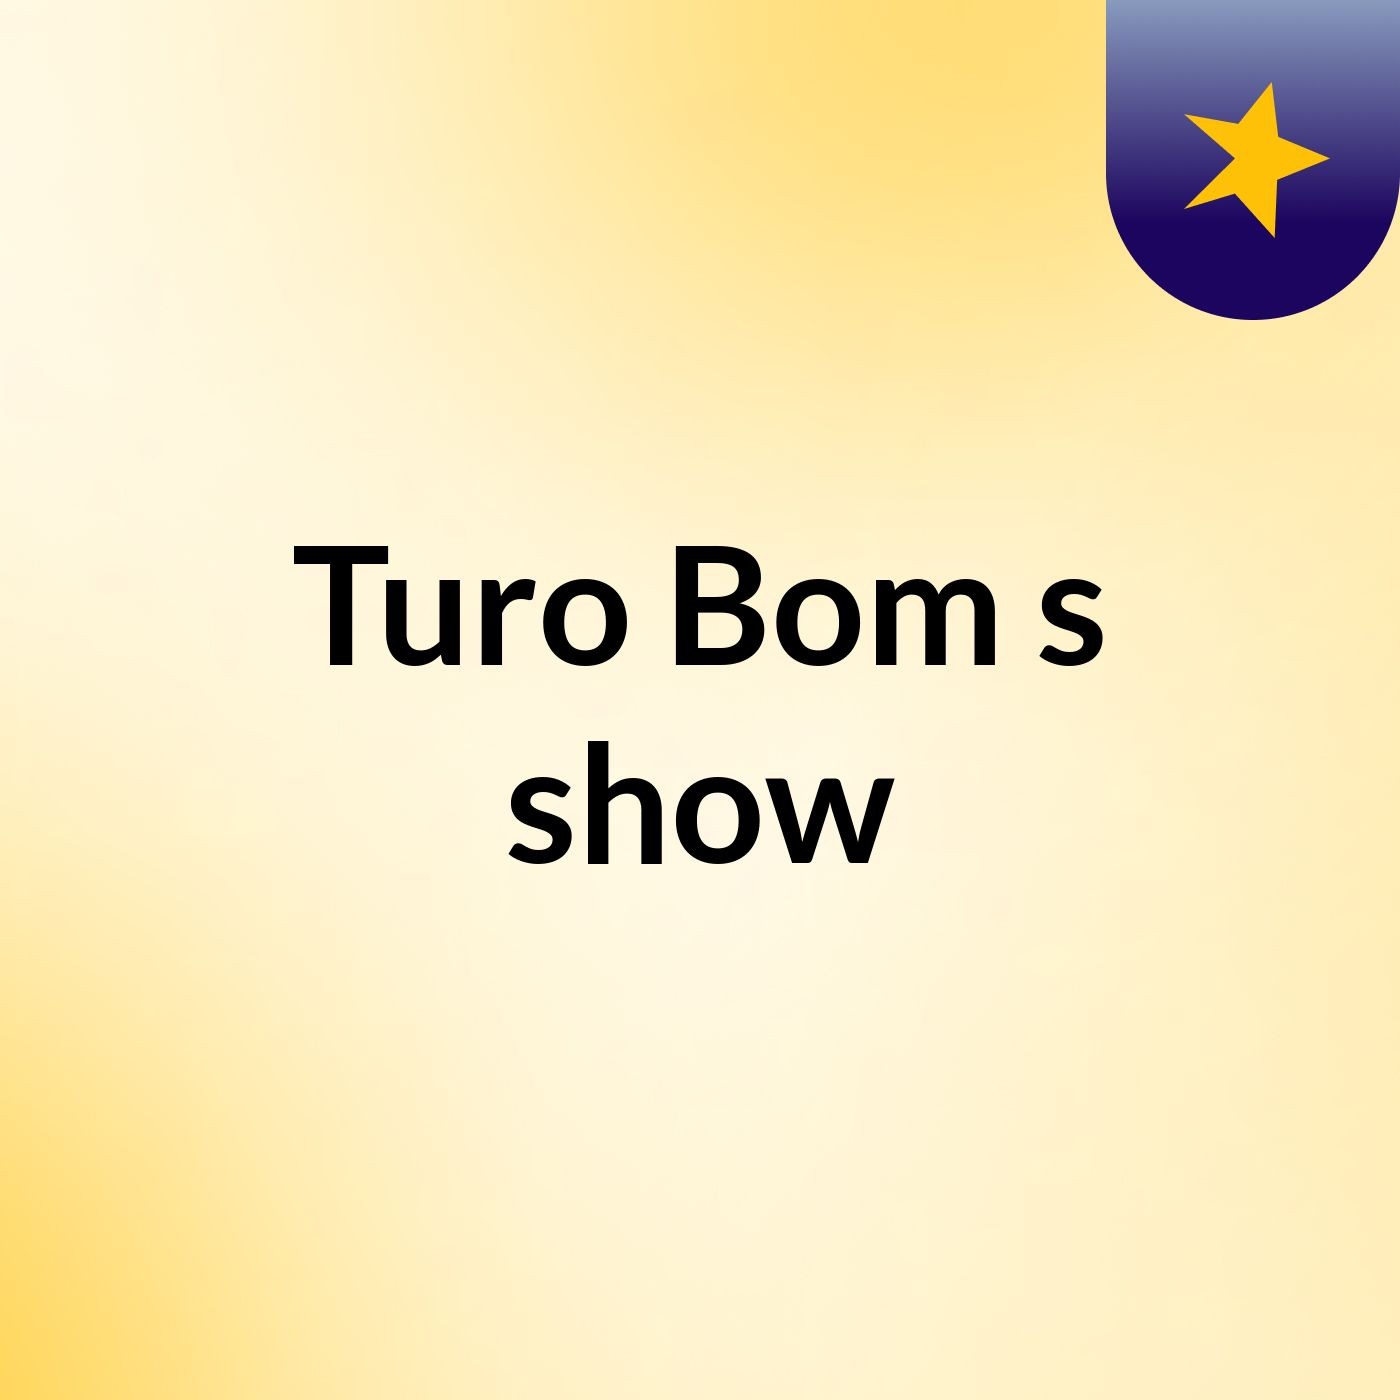 Turo Bom's show